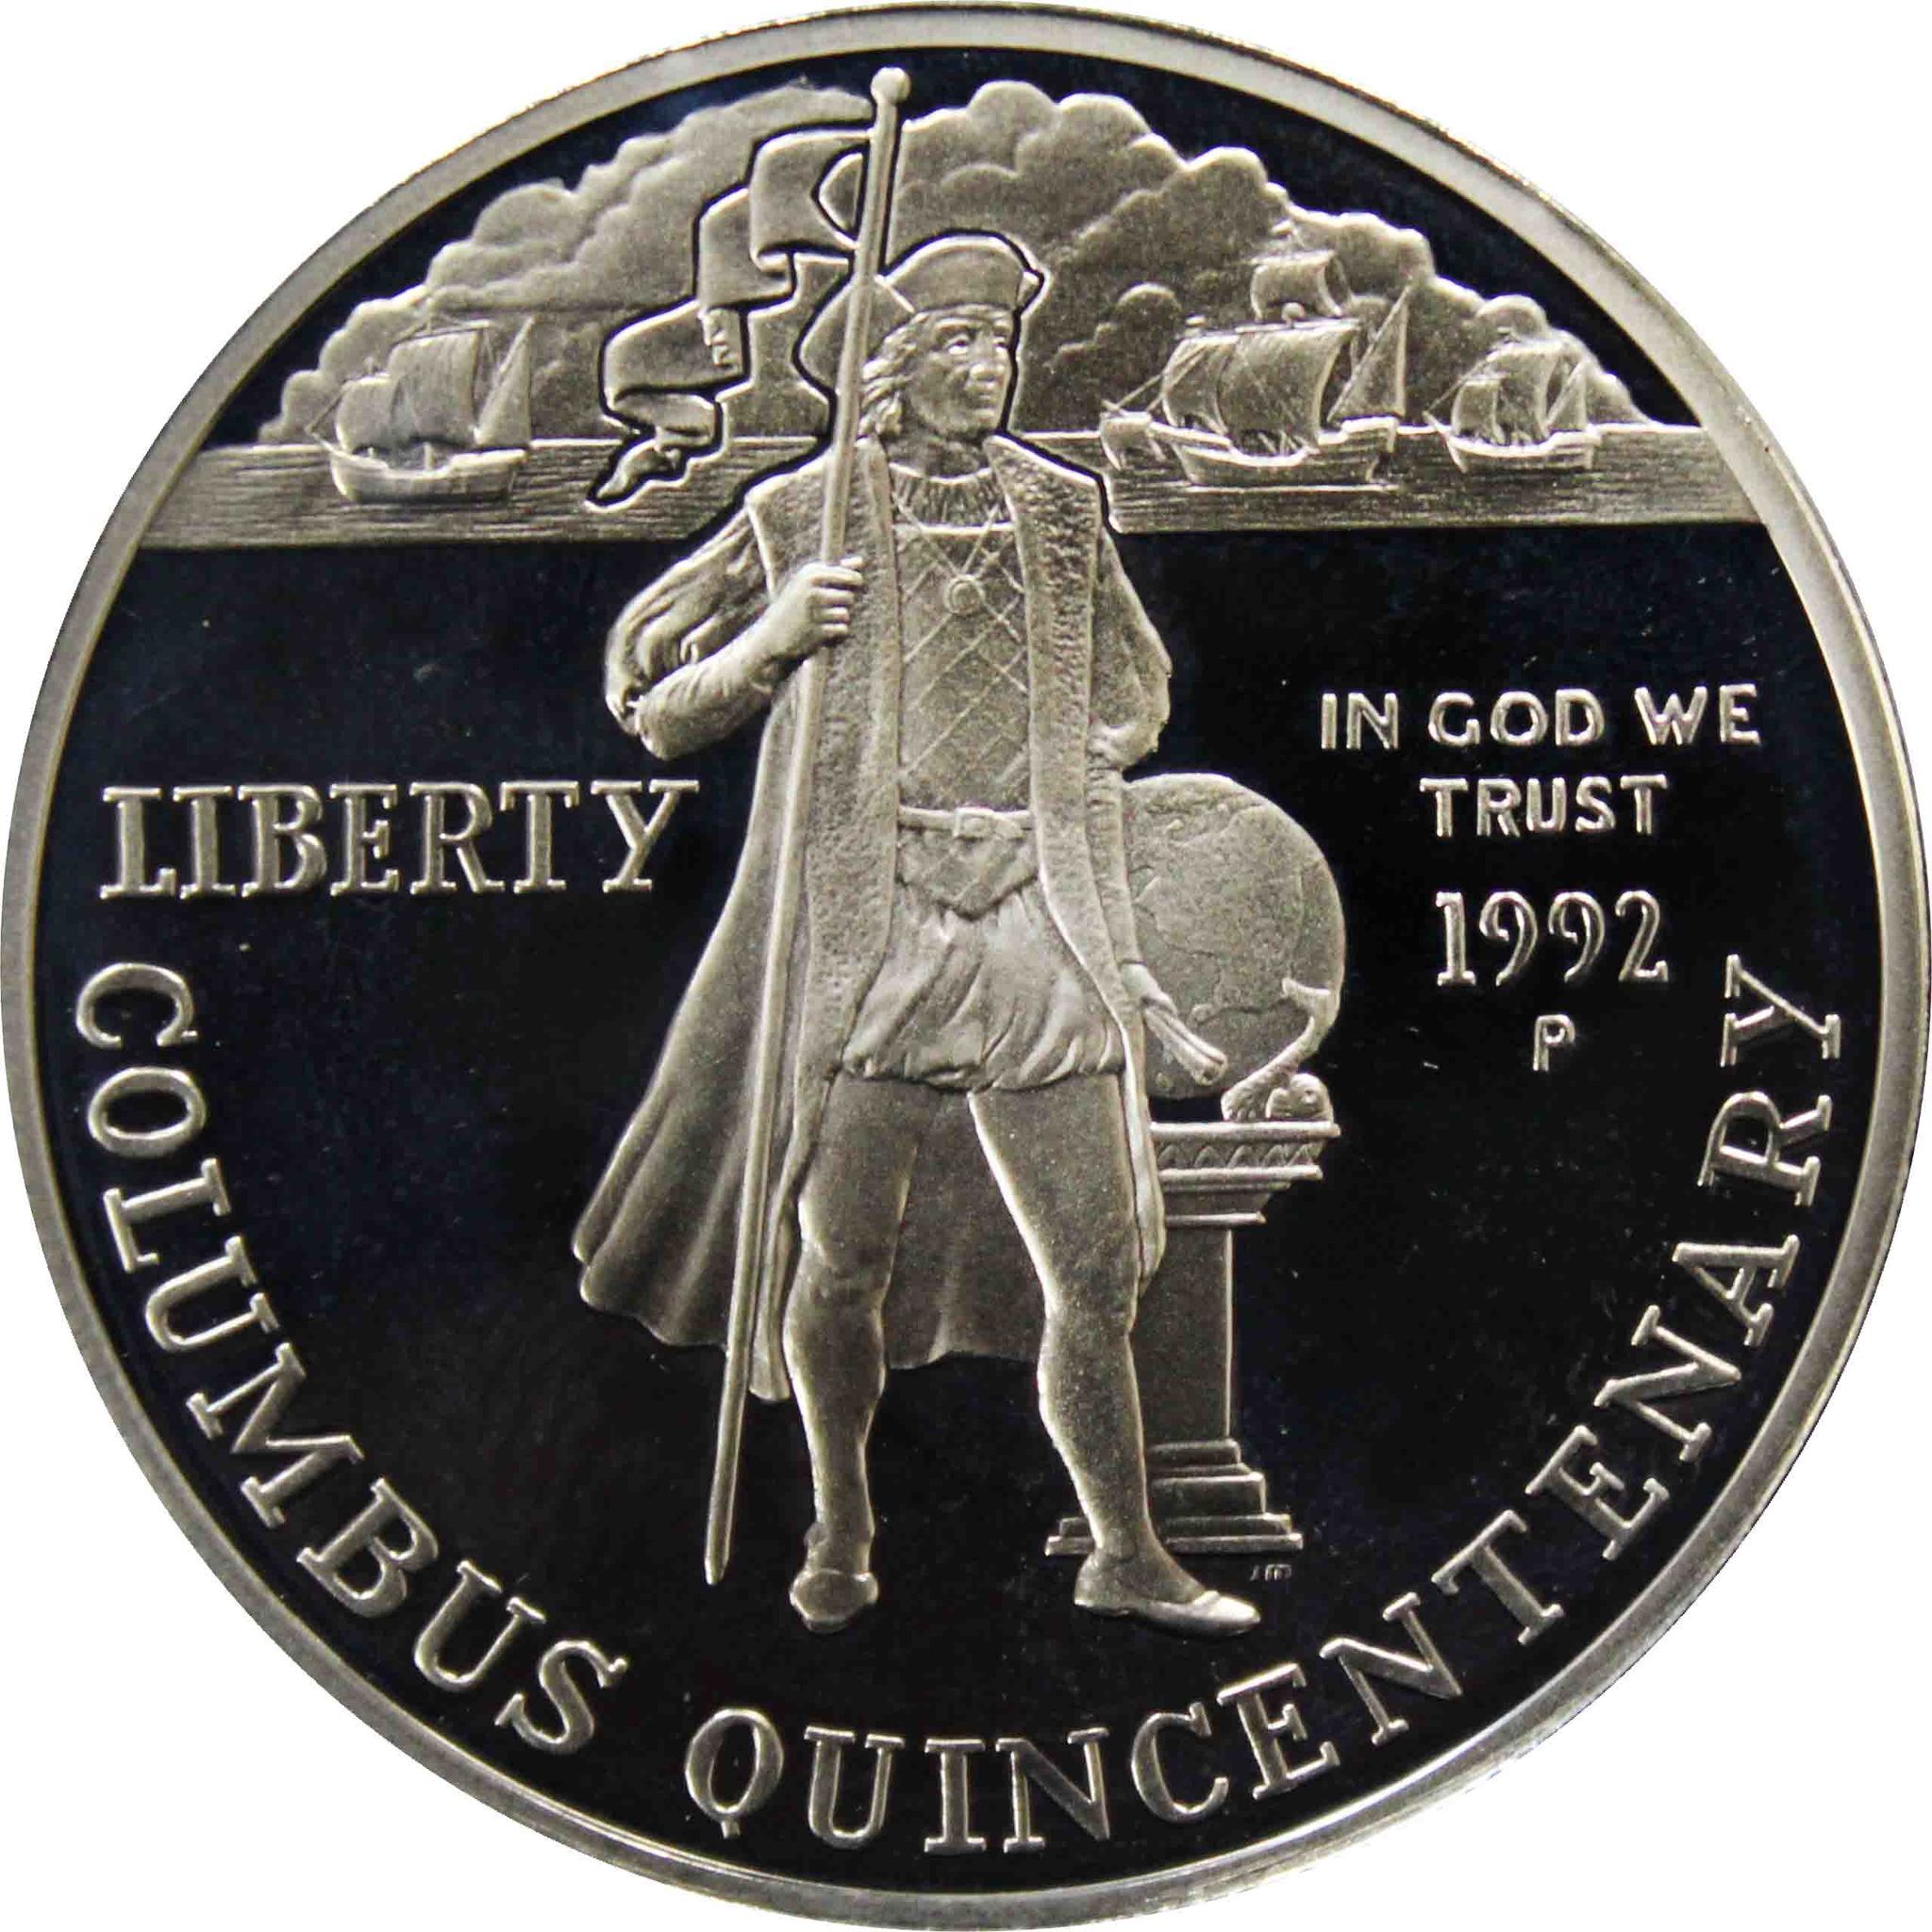 Купить монеты доллары сша. США 1/2 доллара 1992 Колумб. Американский доллар 1992 года. Доллар 1992 серебро США монета Liberty. Серебряная монета Колумб.